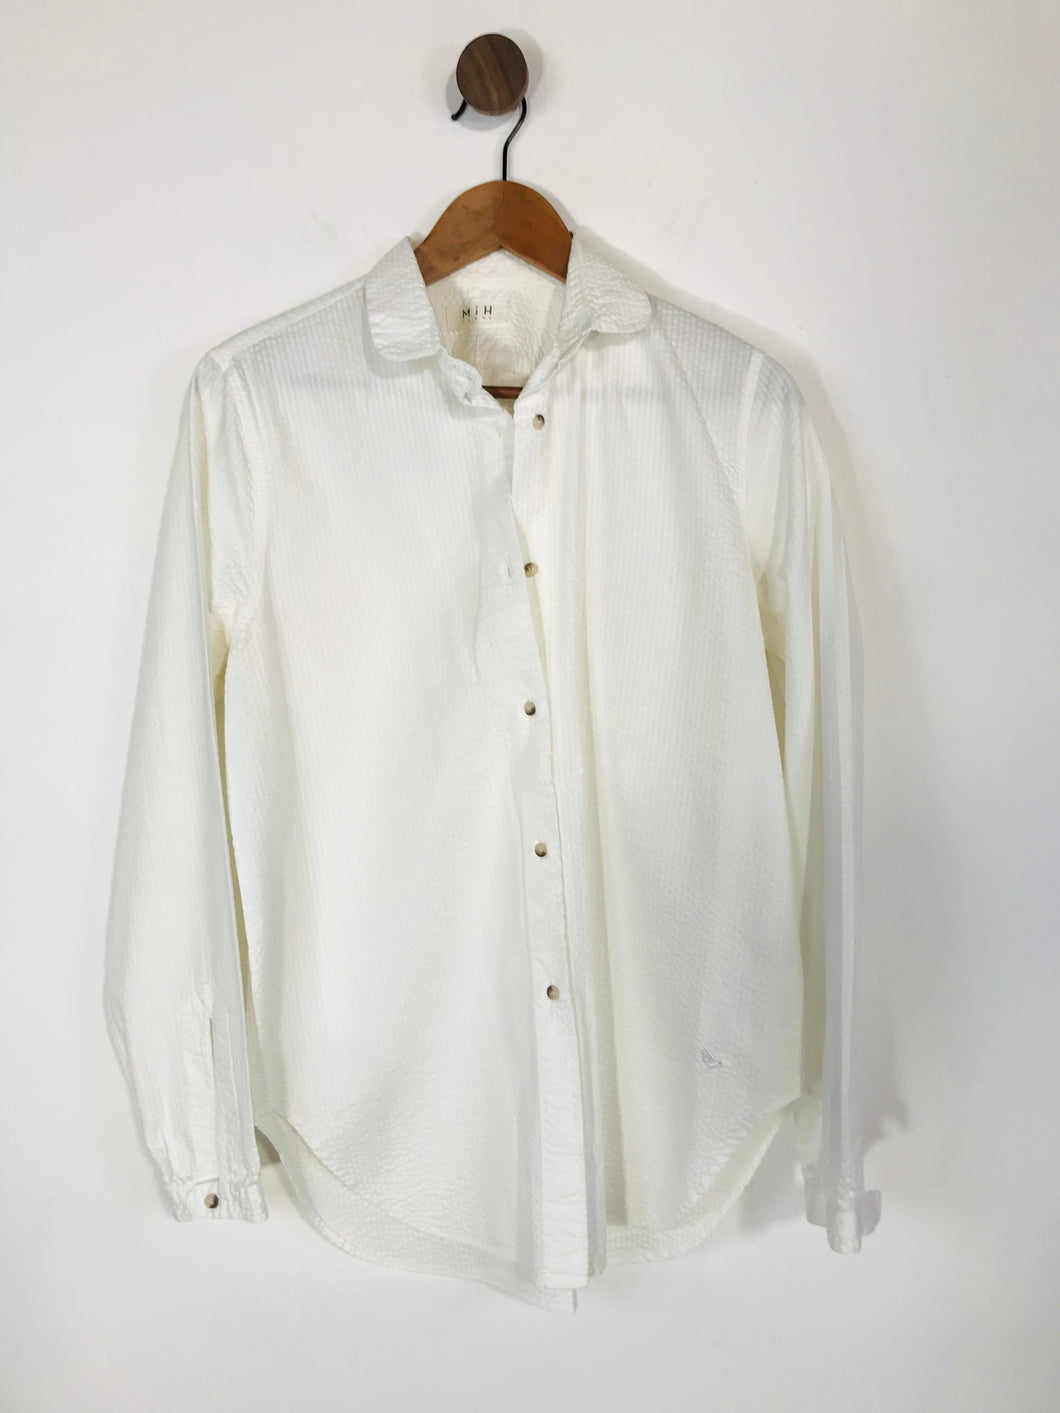 MiH Women's Seersucker Loose Fit Button-Up Shirt | M UK10-12 | White